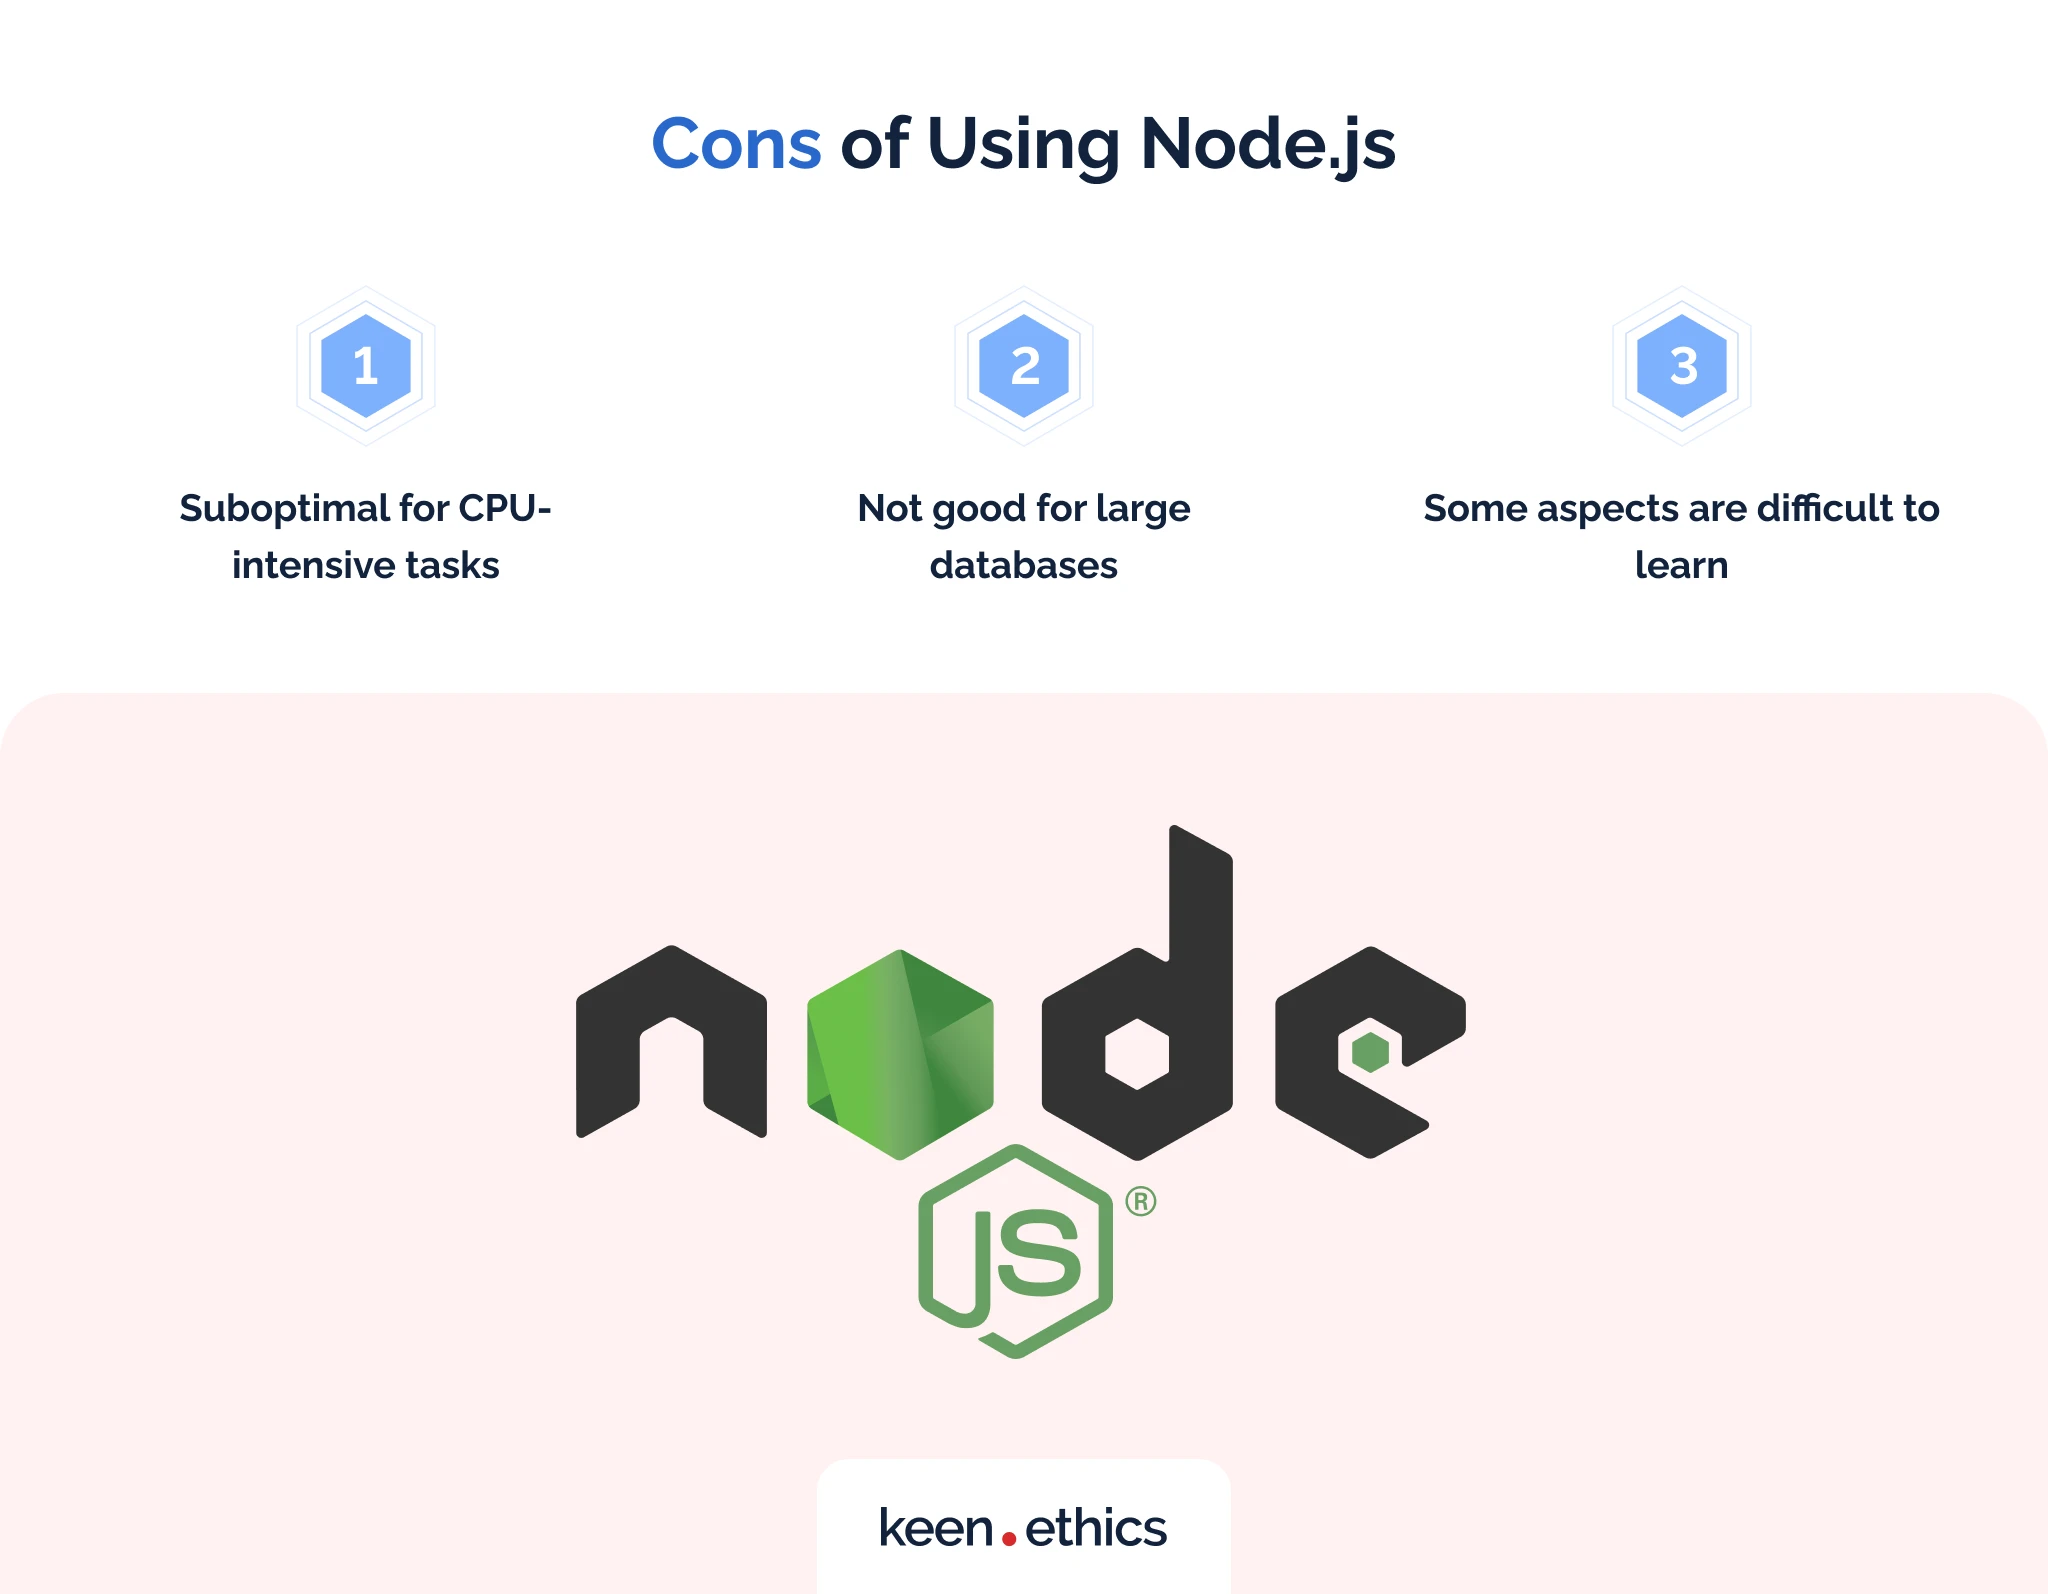 Cons of using Node.js